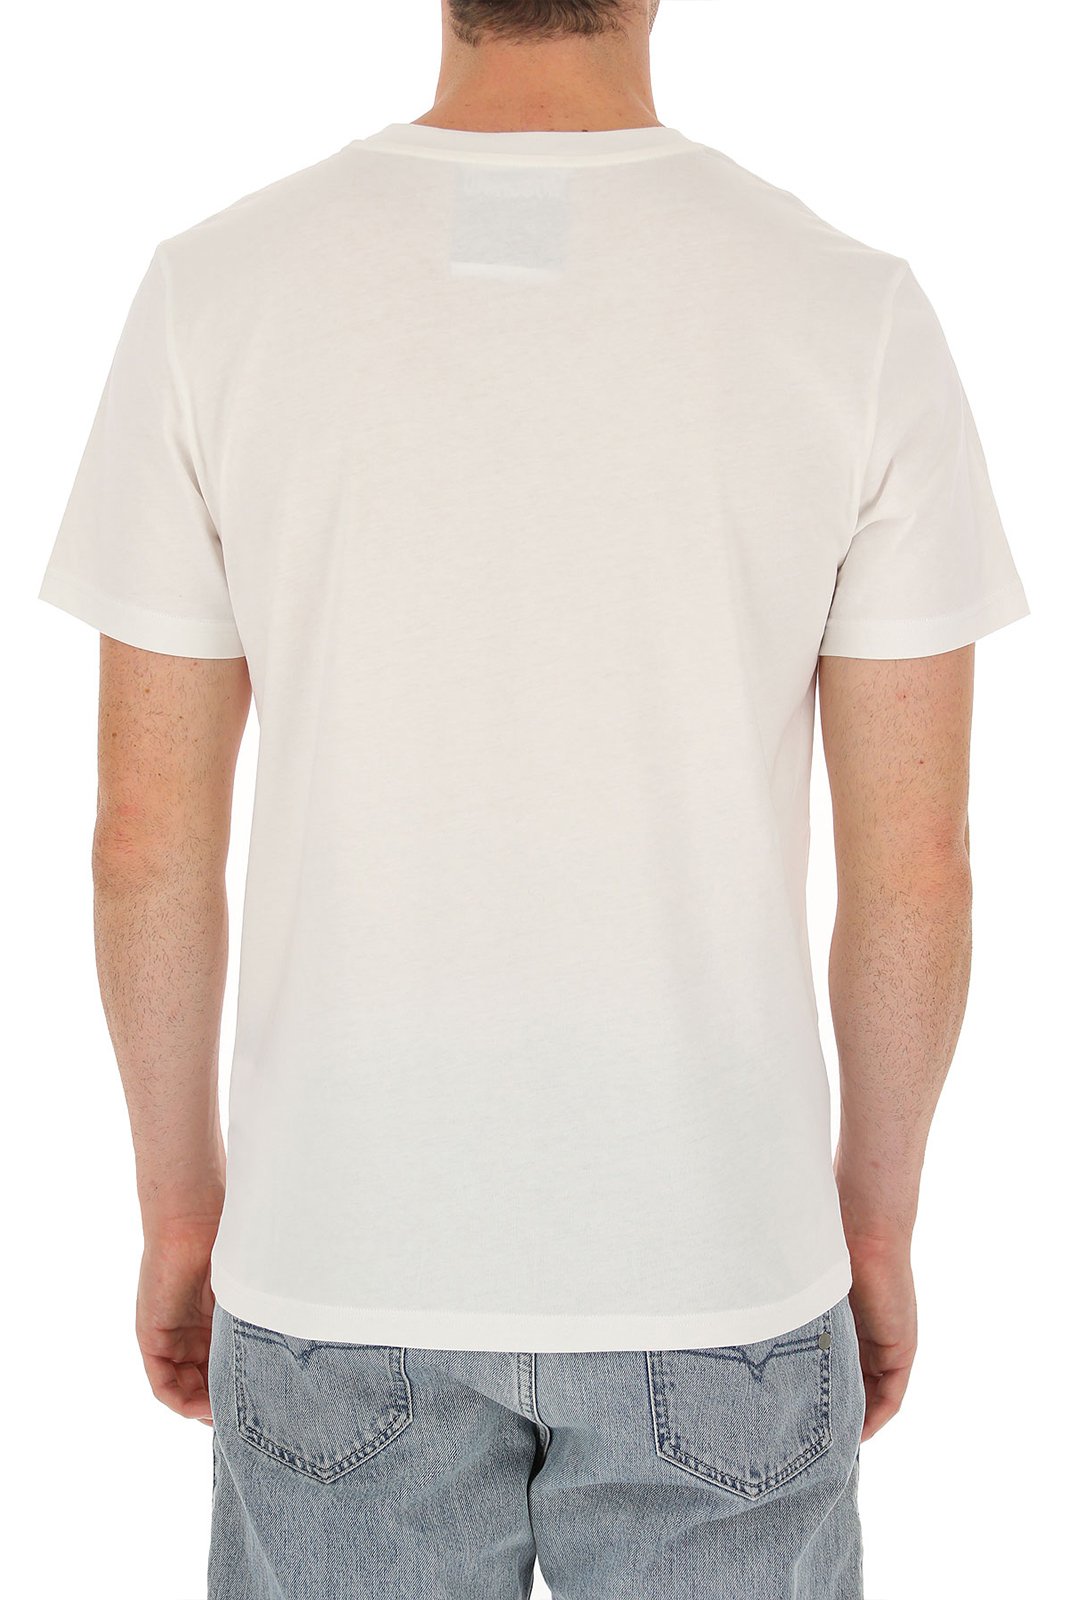 Tee-shirts  Moschino ZJ0707 1002 WHITE